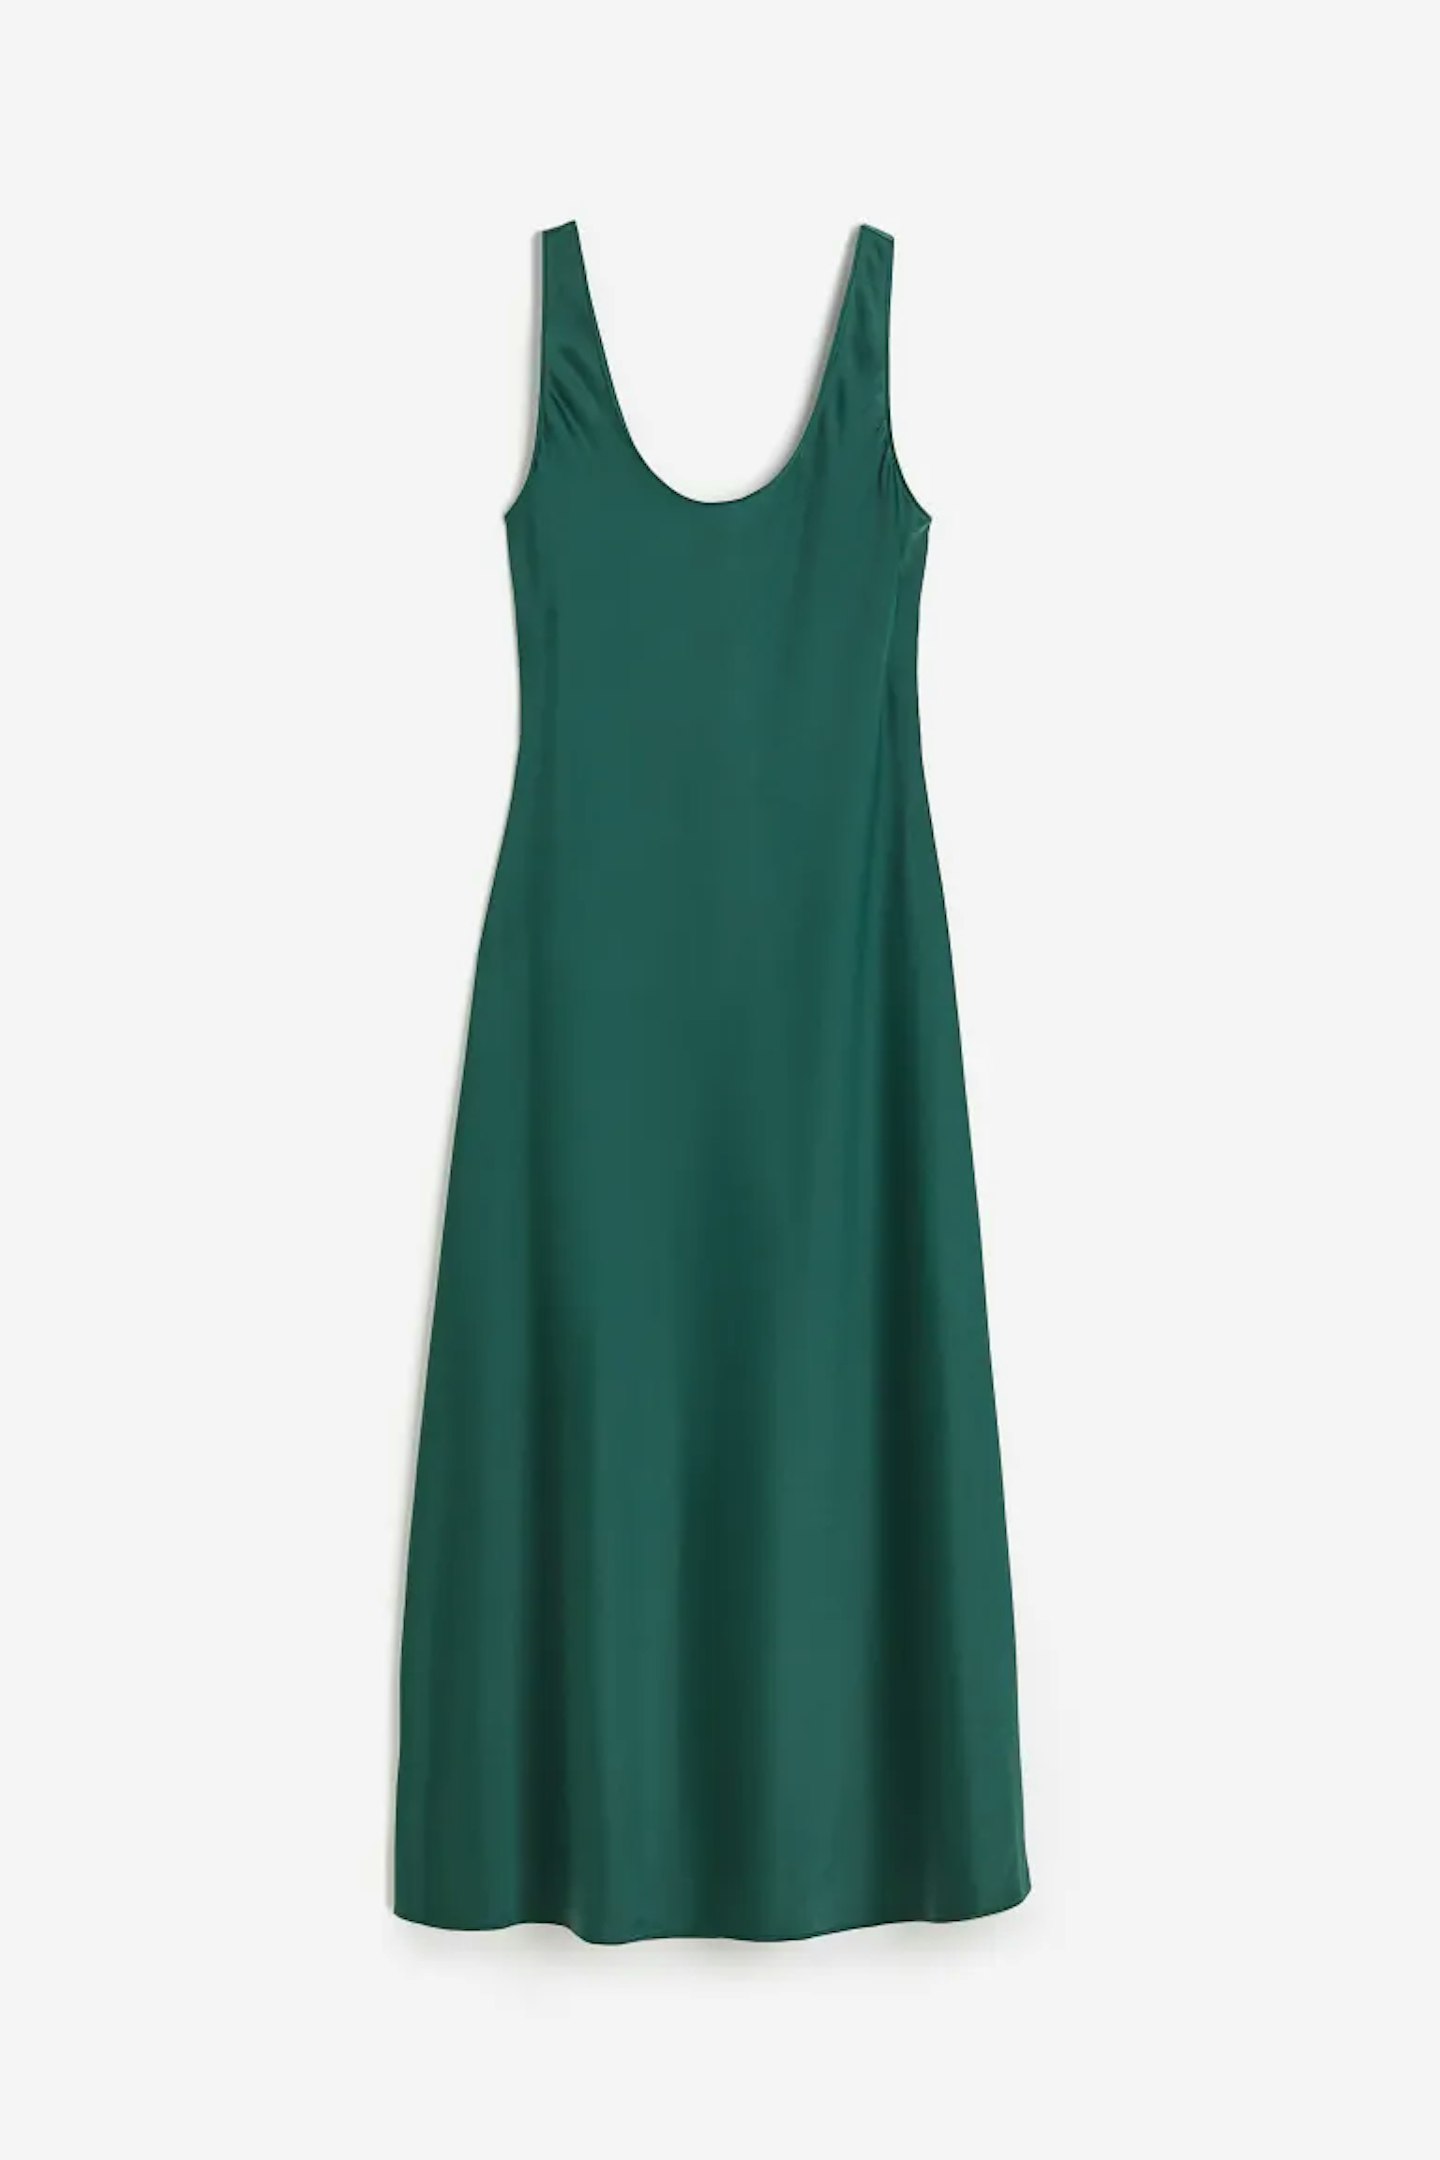 H&M, Sleeveless Dress